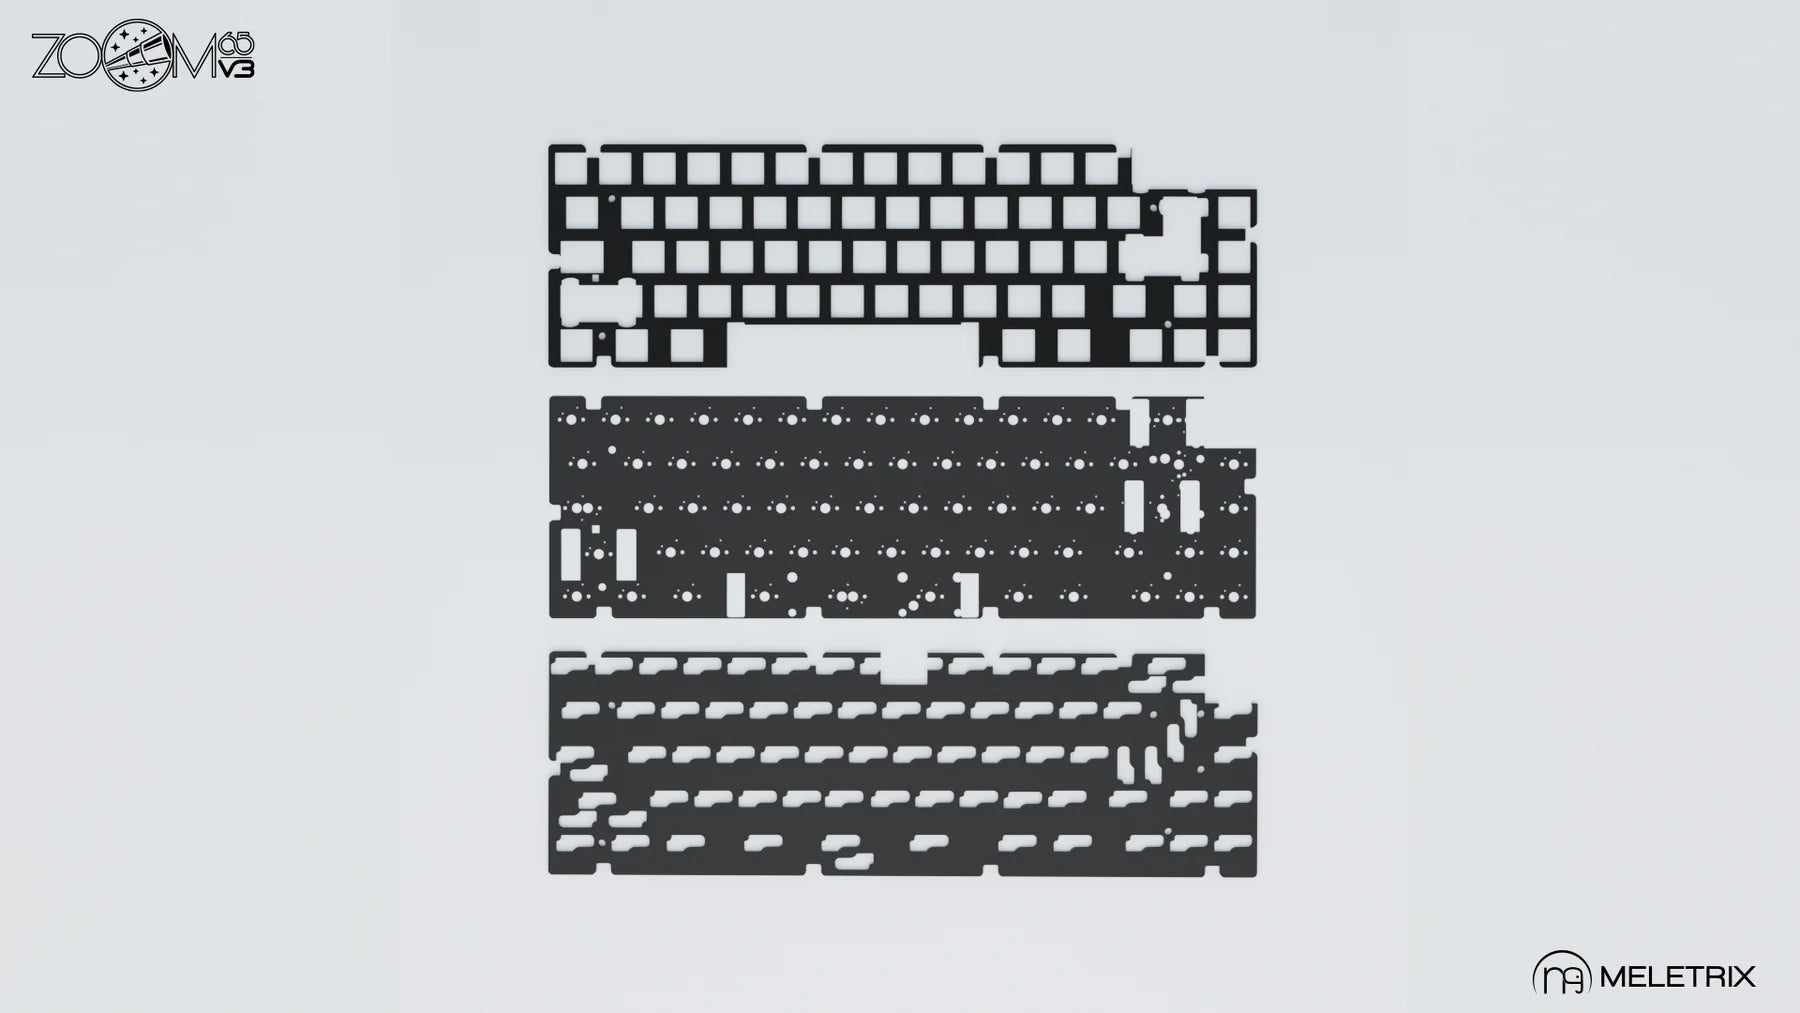 [Pre-Order] Zoom65 V3 - PCB, Plates & Add-Ons